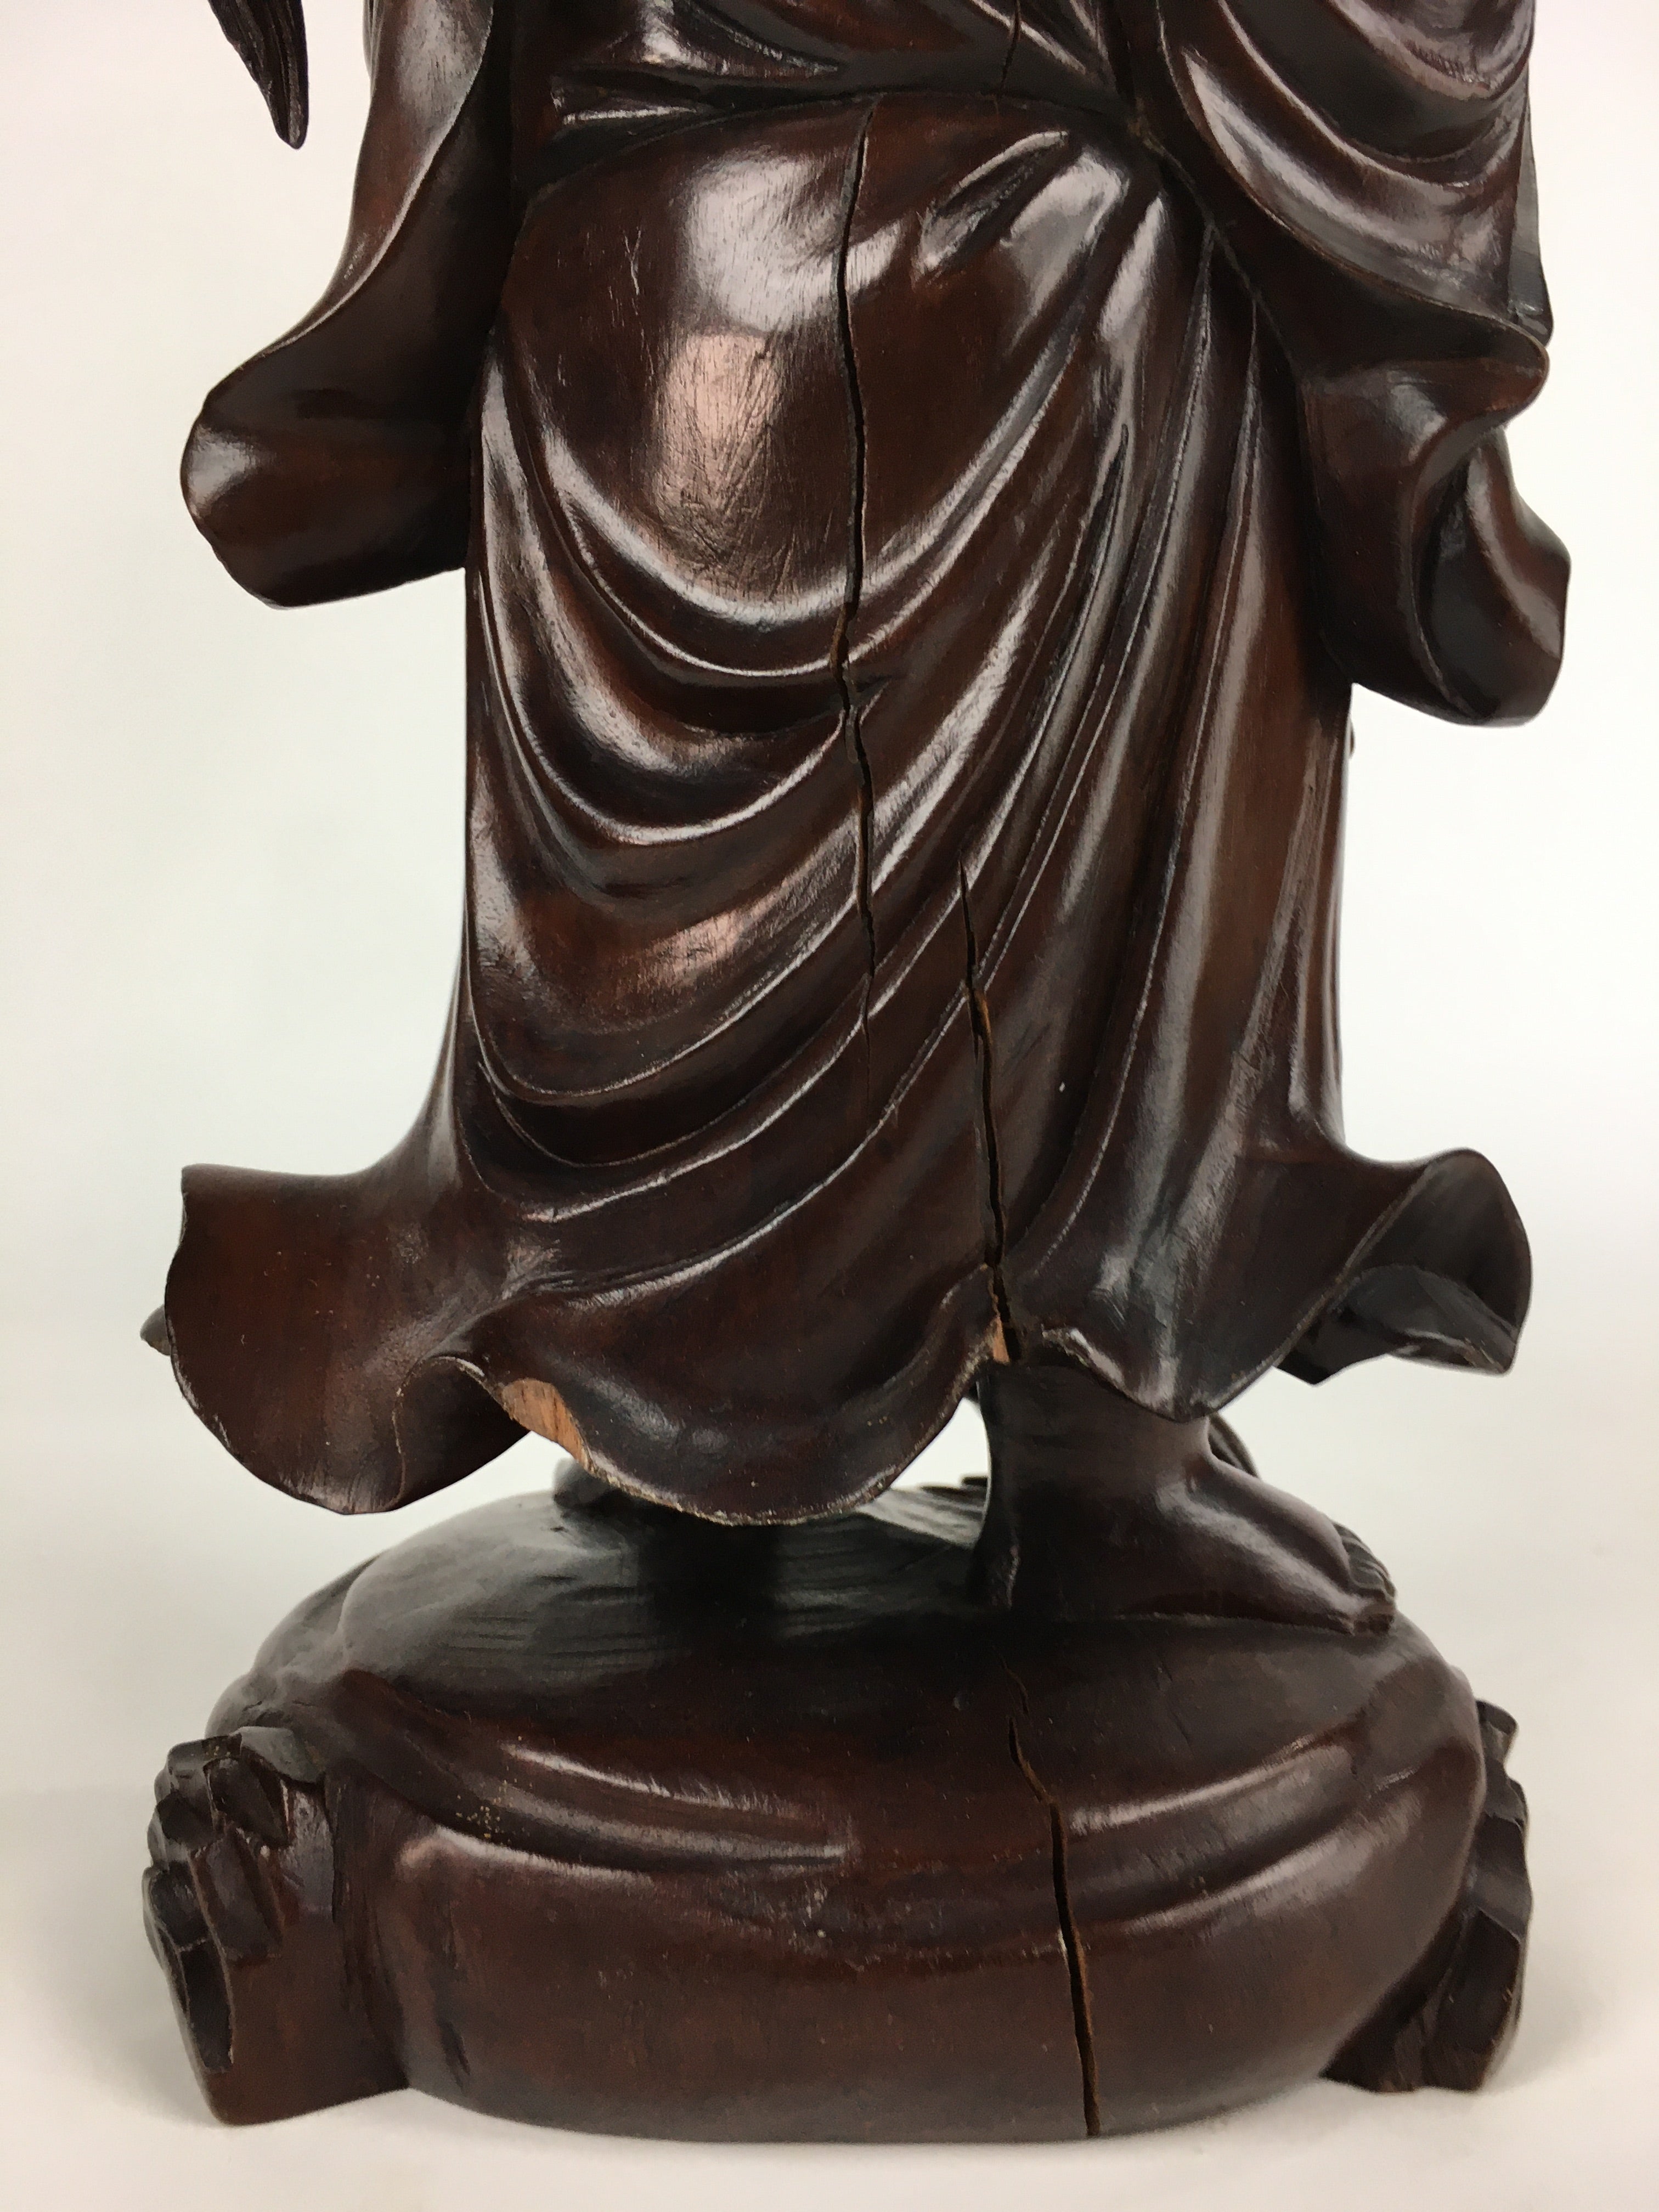 Japanese Lacquered Wooden Buddhist Art Hotei Statue Vtg Amulet Mokuzo BD803